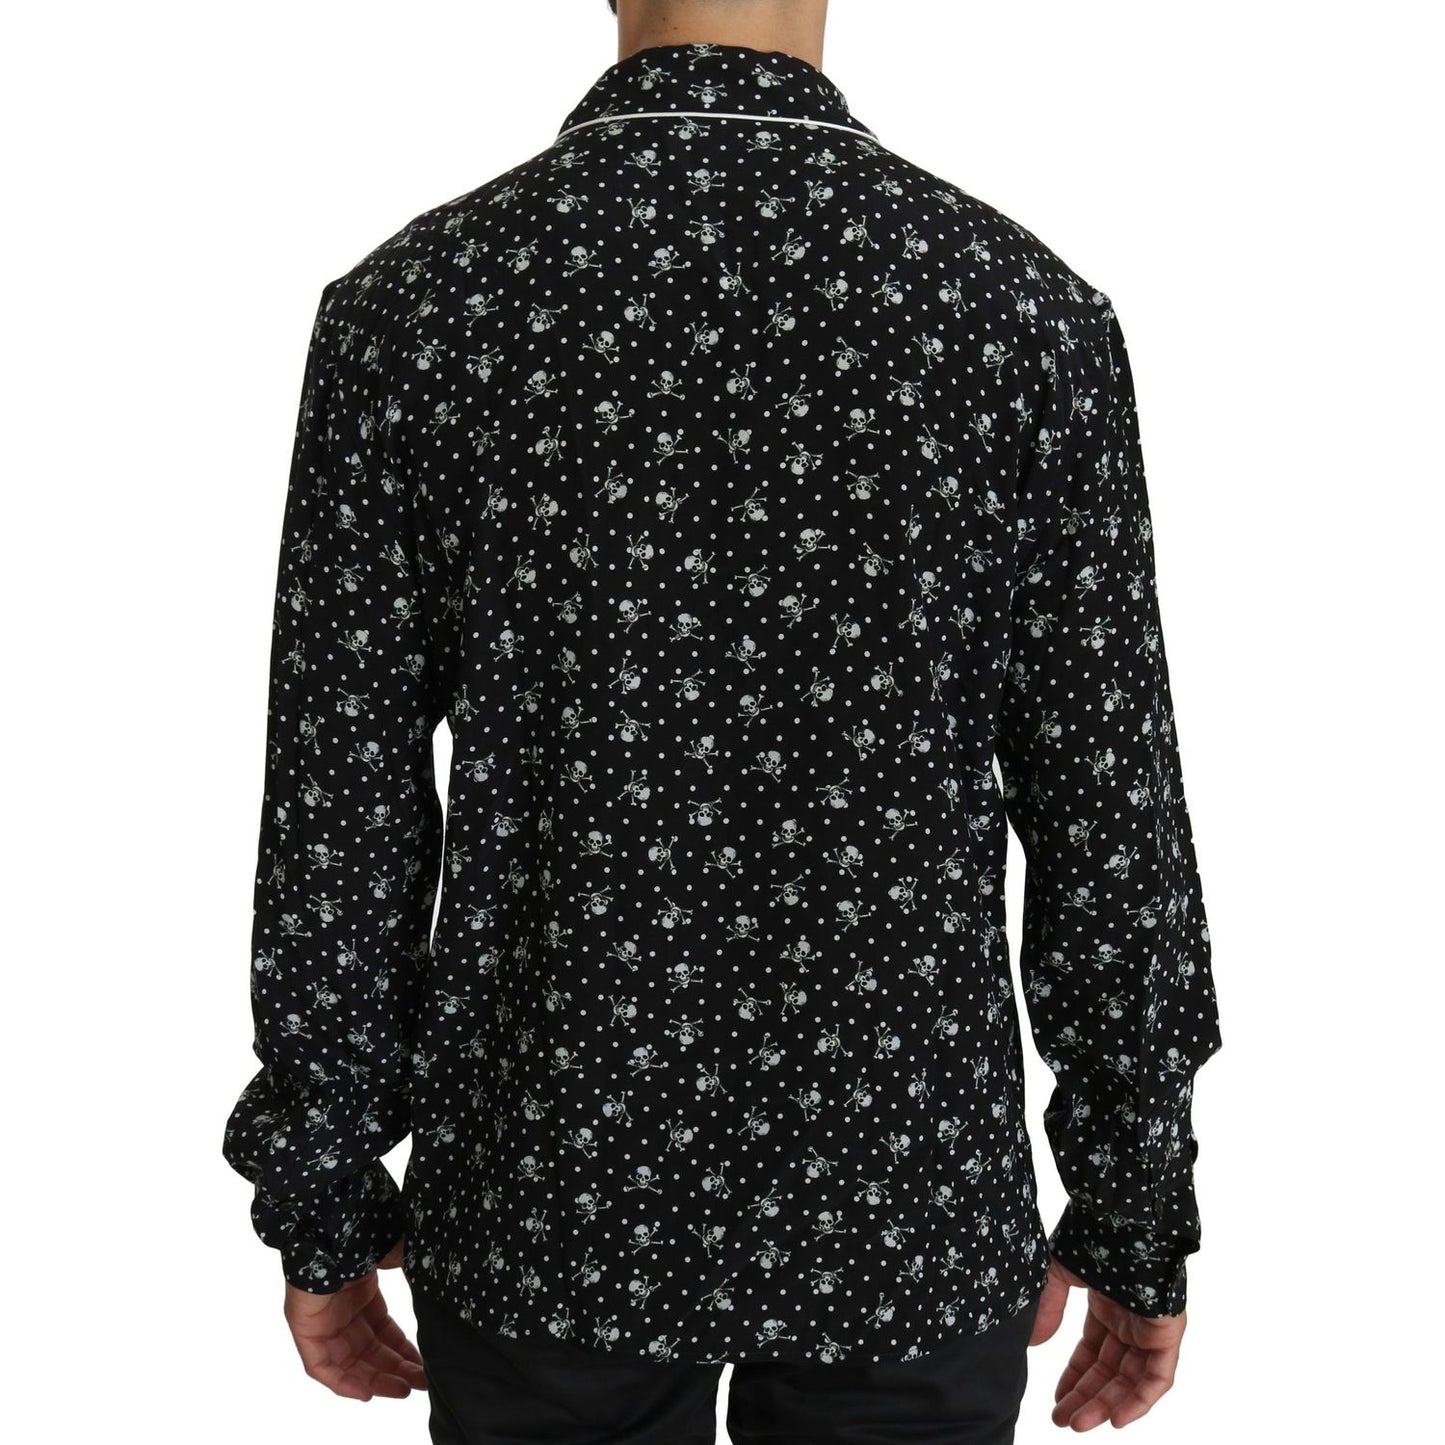 Dolce & Gabbana Elegant Silk Pajama Shirt with Skull Print black-skull-print-silk-sleepwear-shirt IMG_0788-scaled-d2705c83-b90.jpg